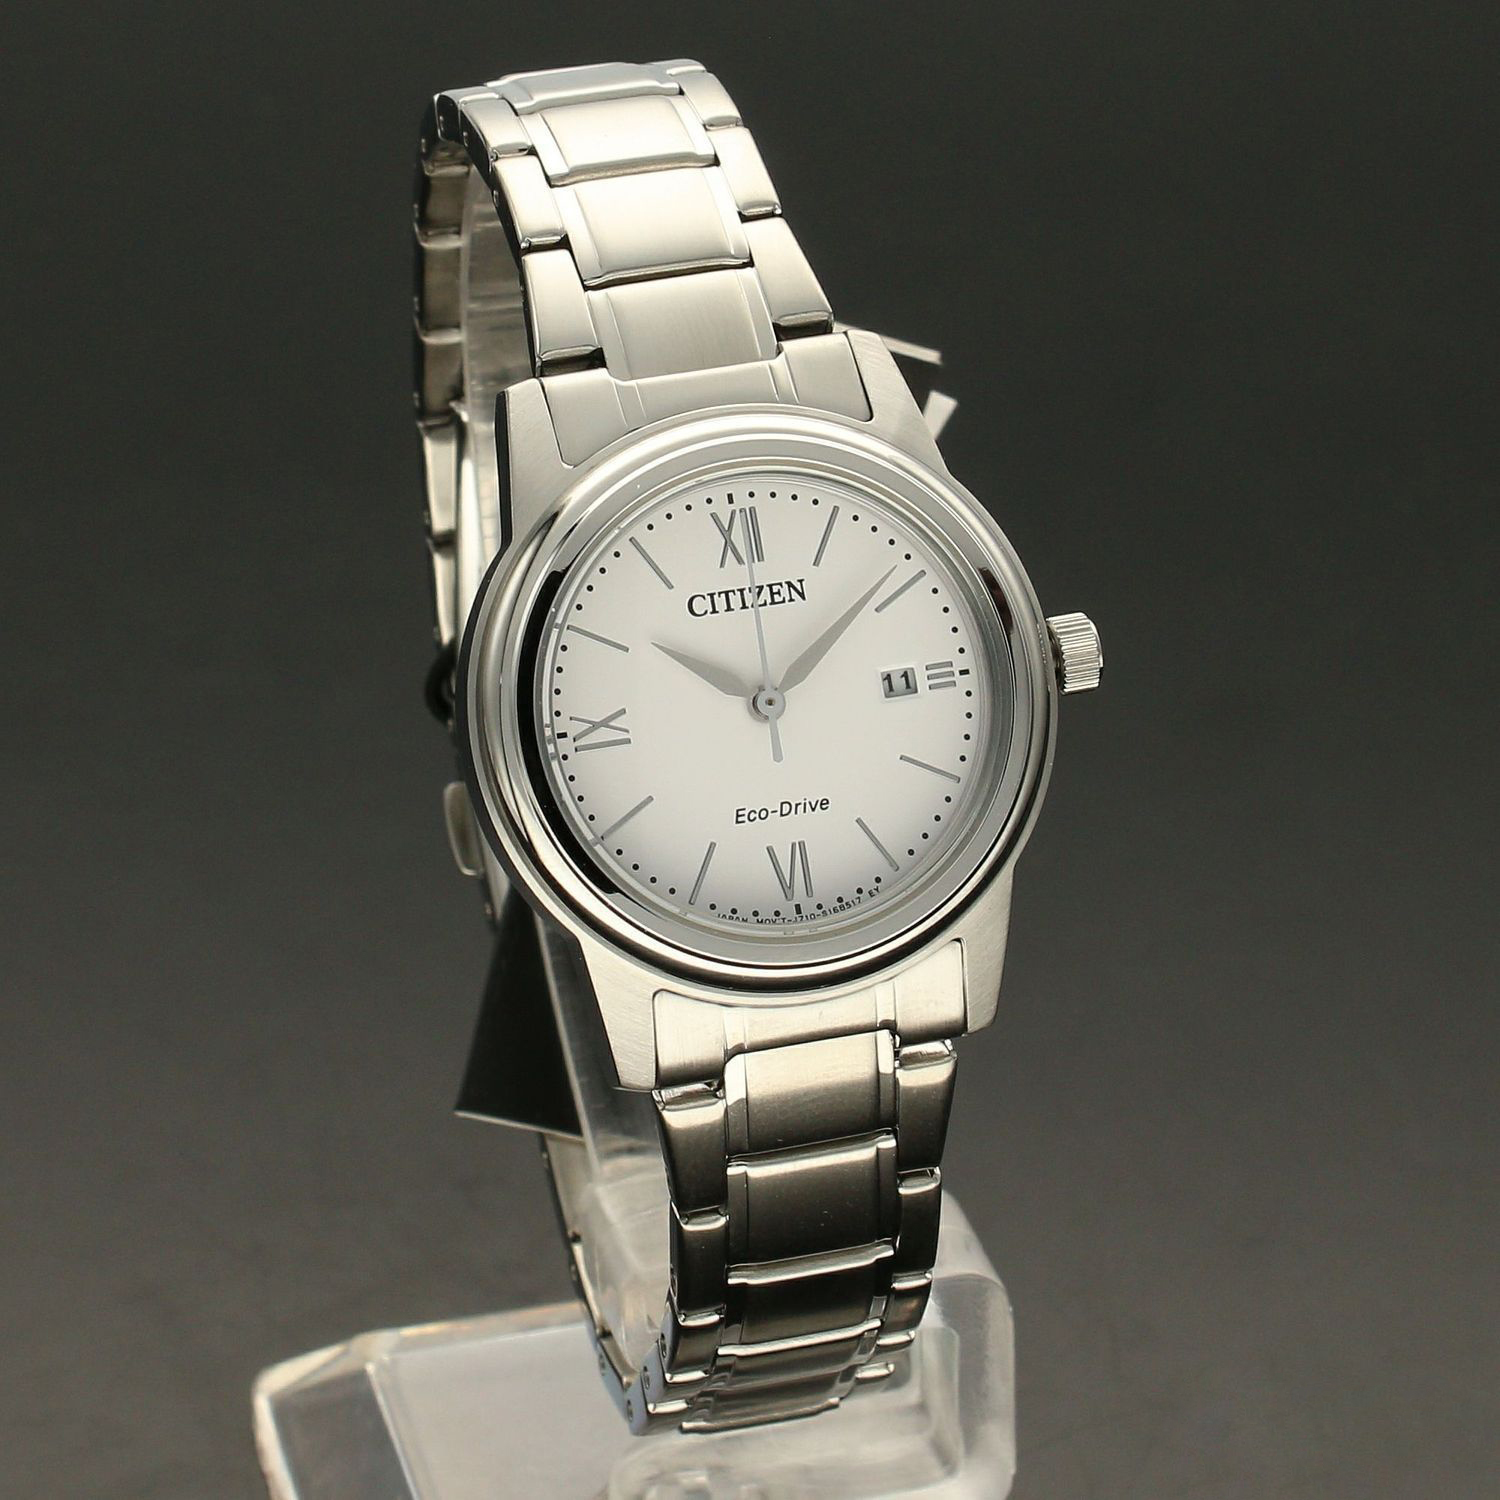 Đồng hồ Nữ chính hãng Citizen Eco Drive FE1220-89A-Size 30